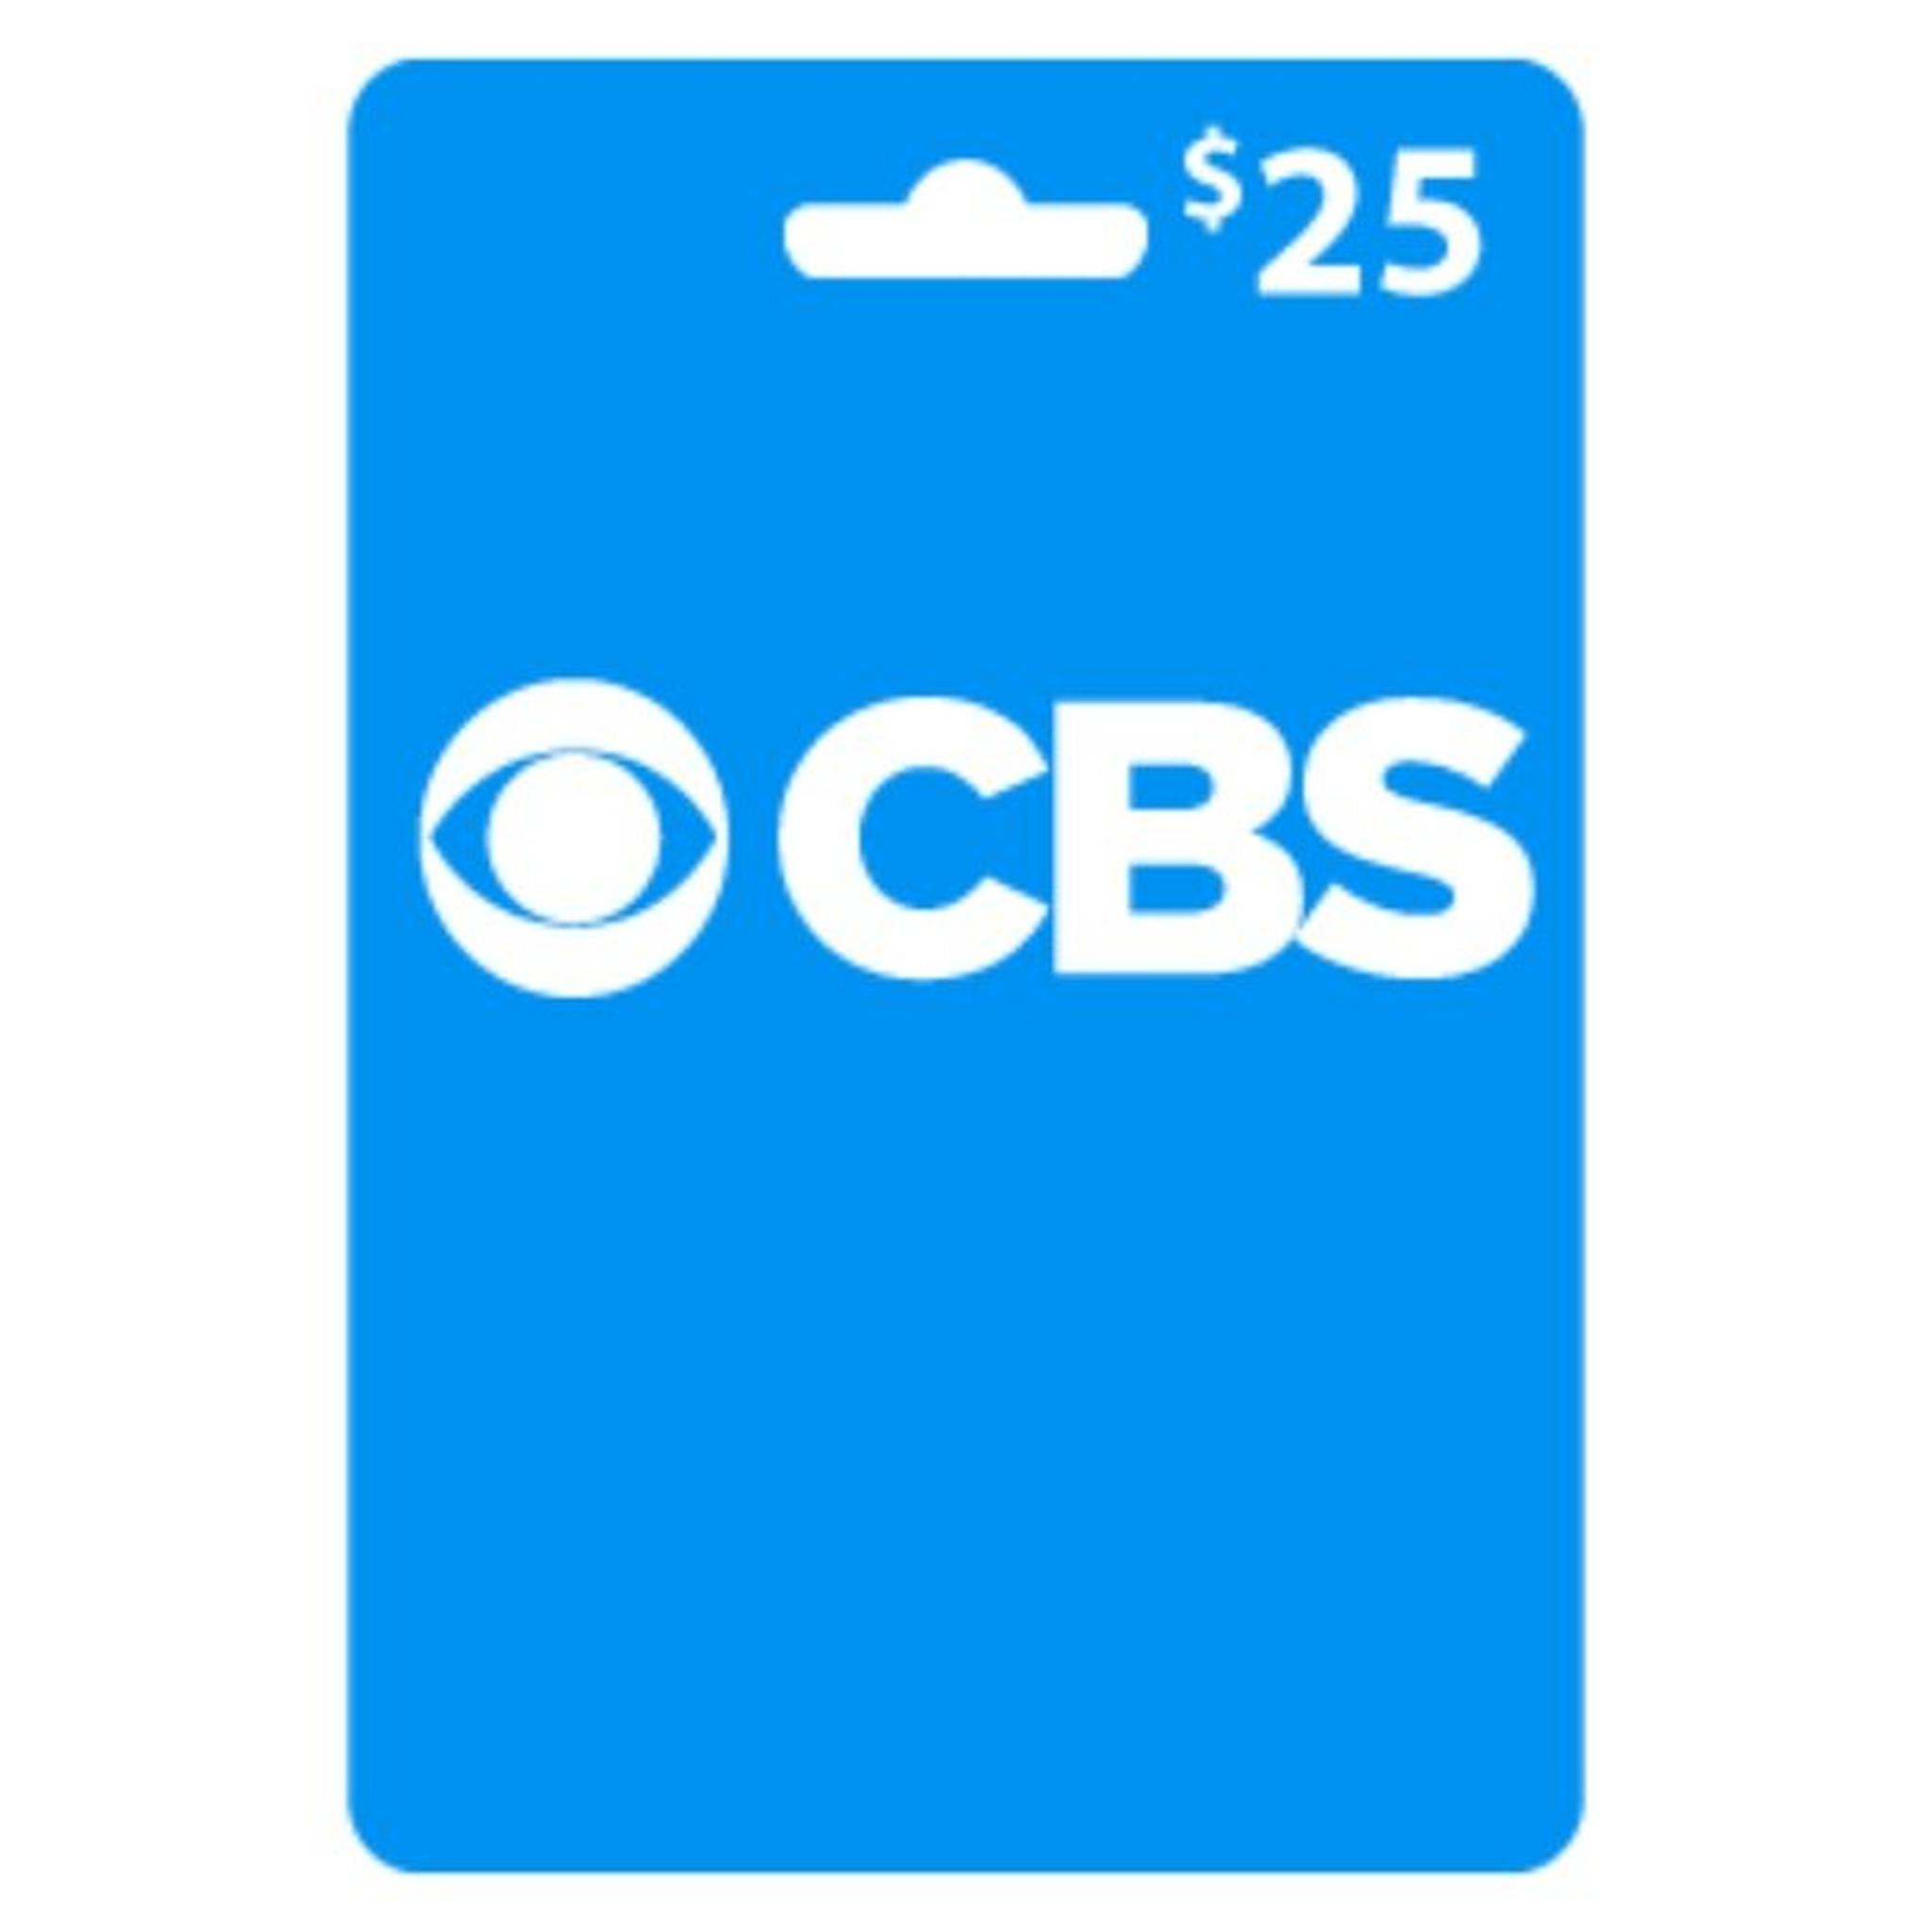 CBS All Access Gift Card $25